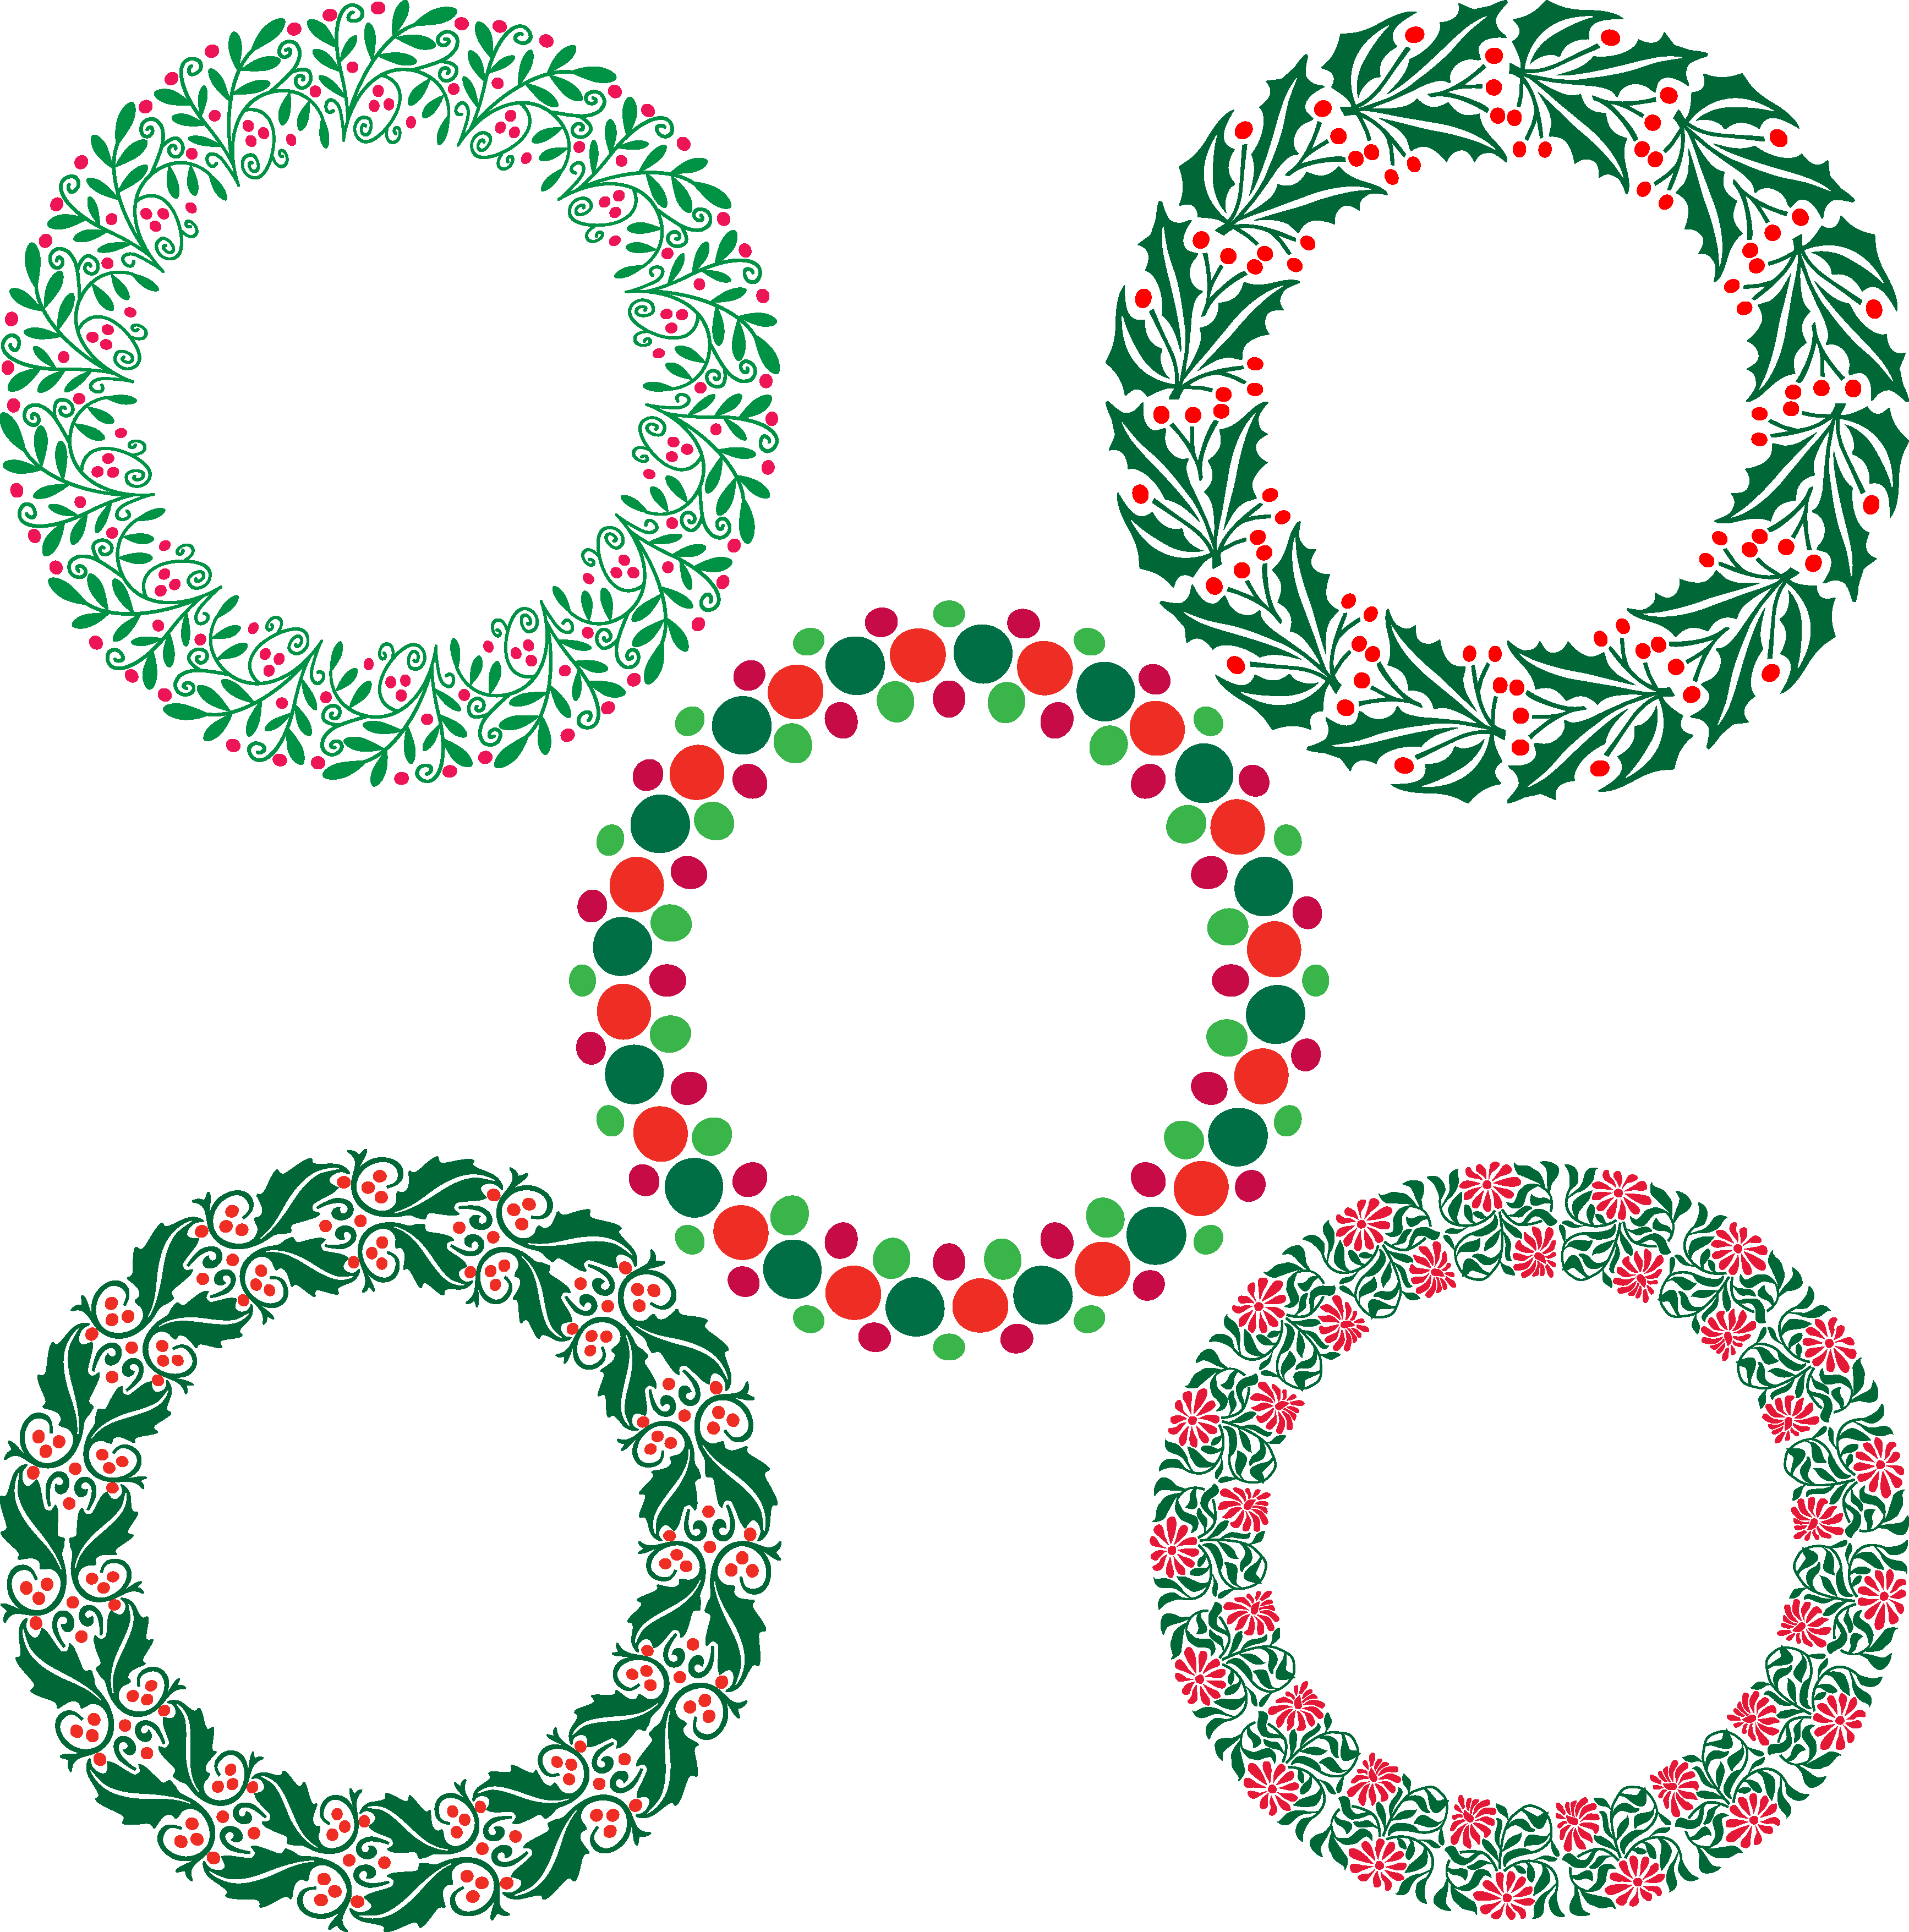 Download Christmas wreath frames - Download Free Vectors, Clipart ...